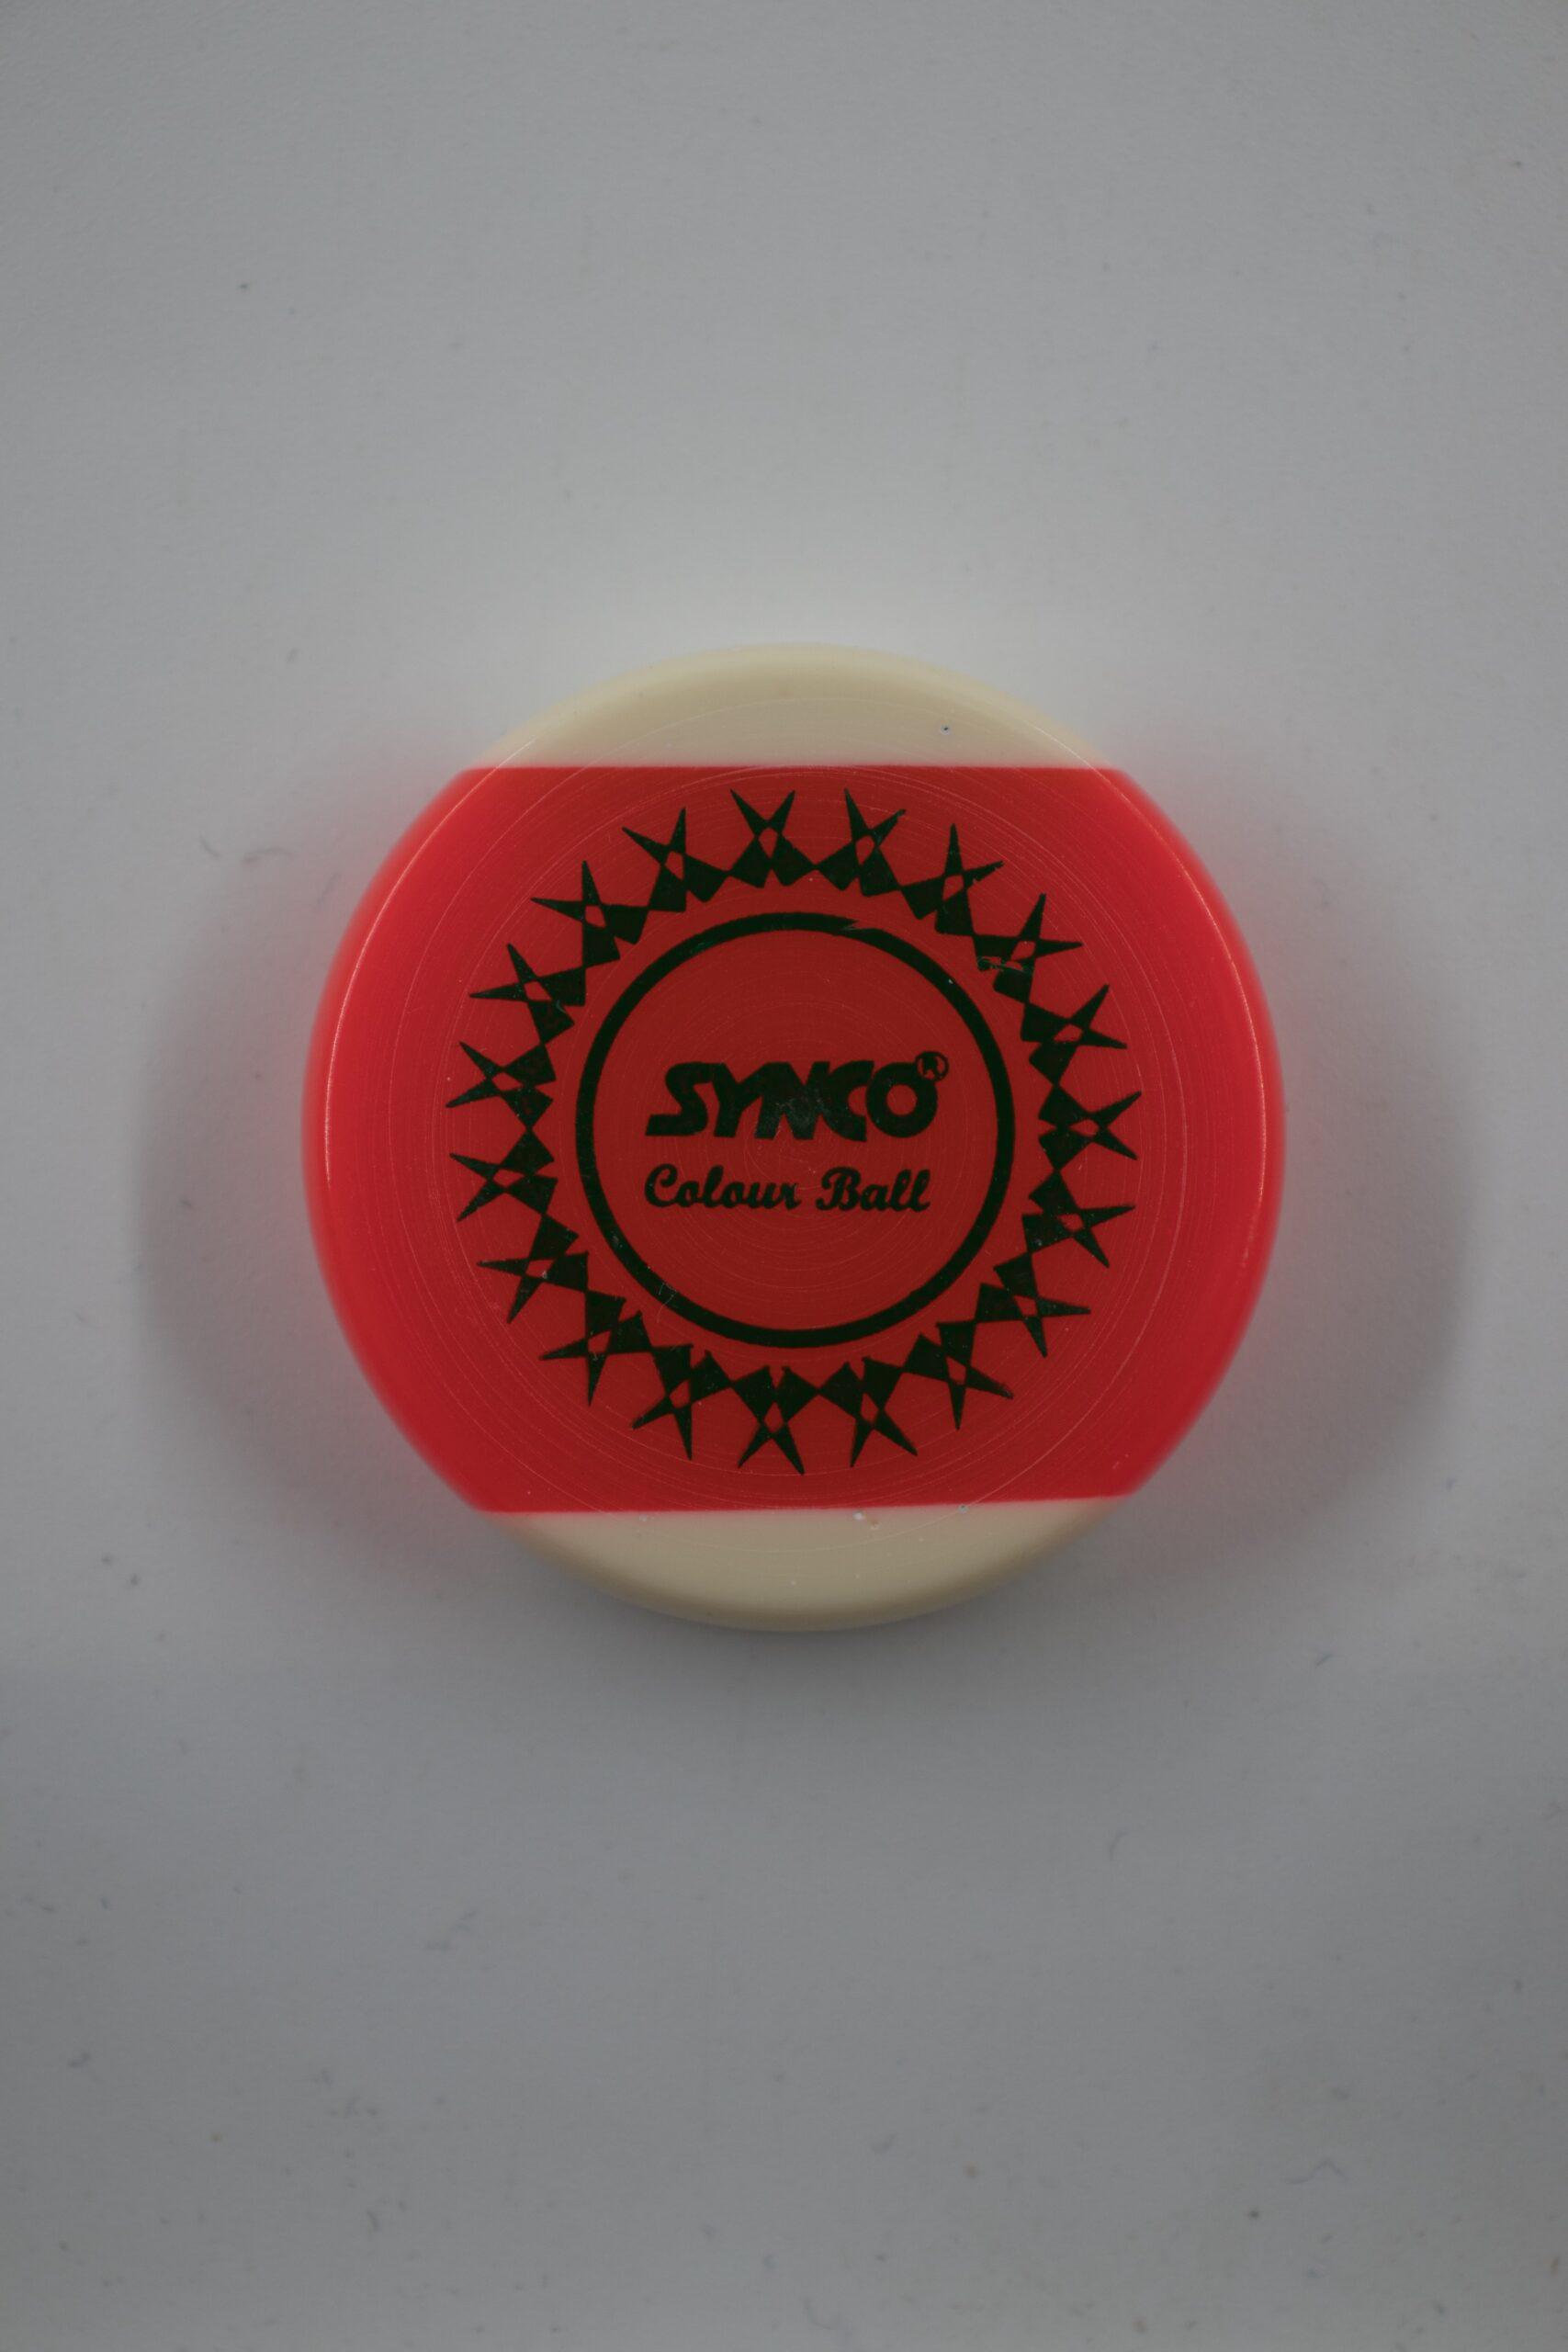 Synco Color Ball carrom striker professional 15g, Assorted color - 1